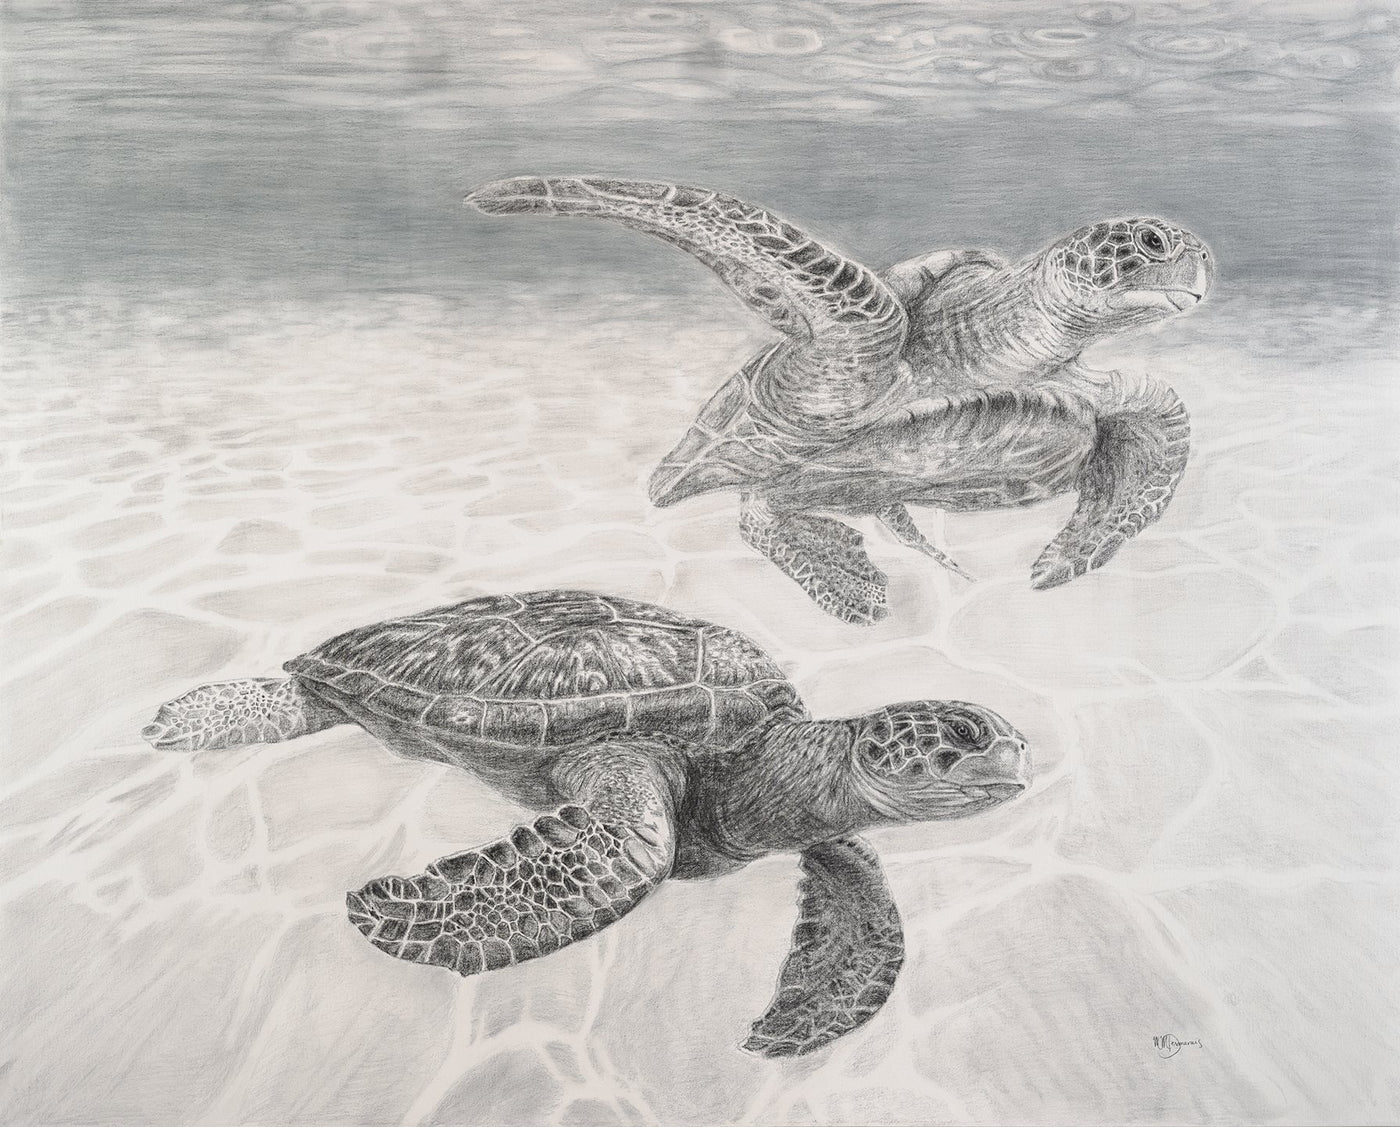 Sea Turtles Illustration - "Social Animal" Collection - LE NID atelier